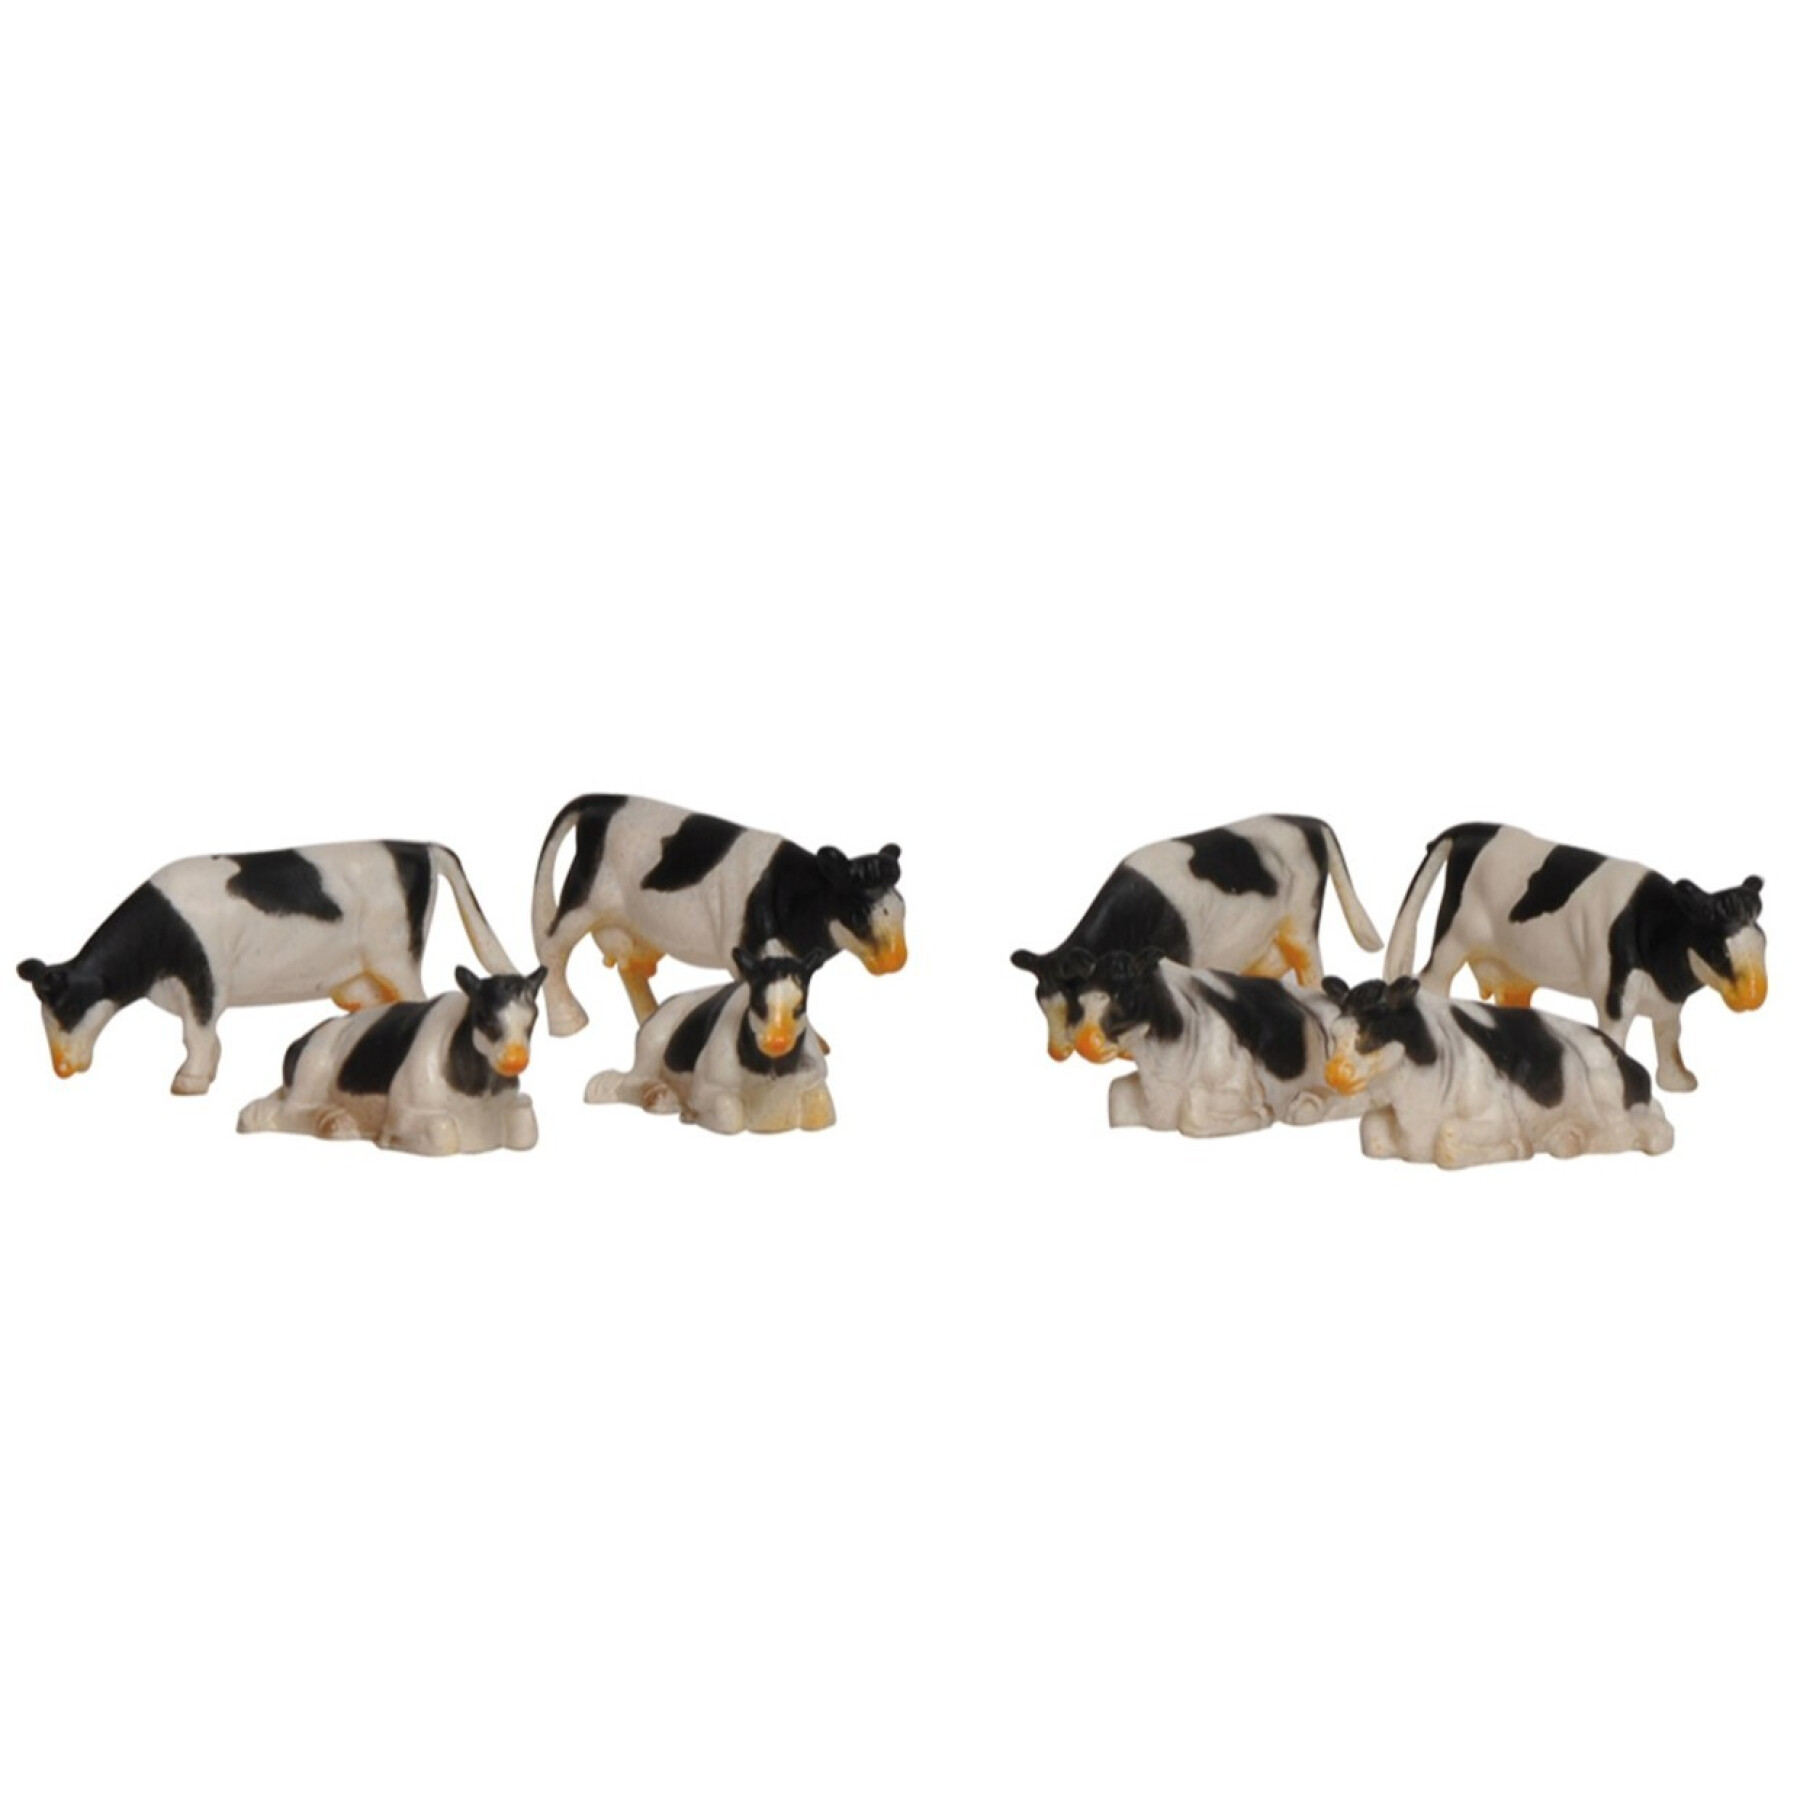 Figurine - cows Kidsglobe (x8)